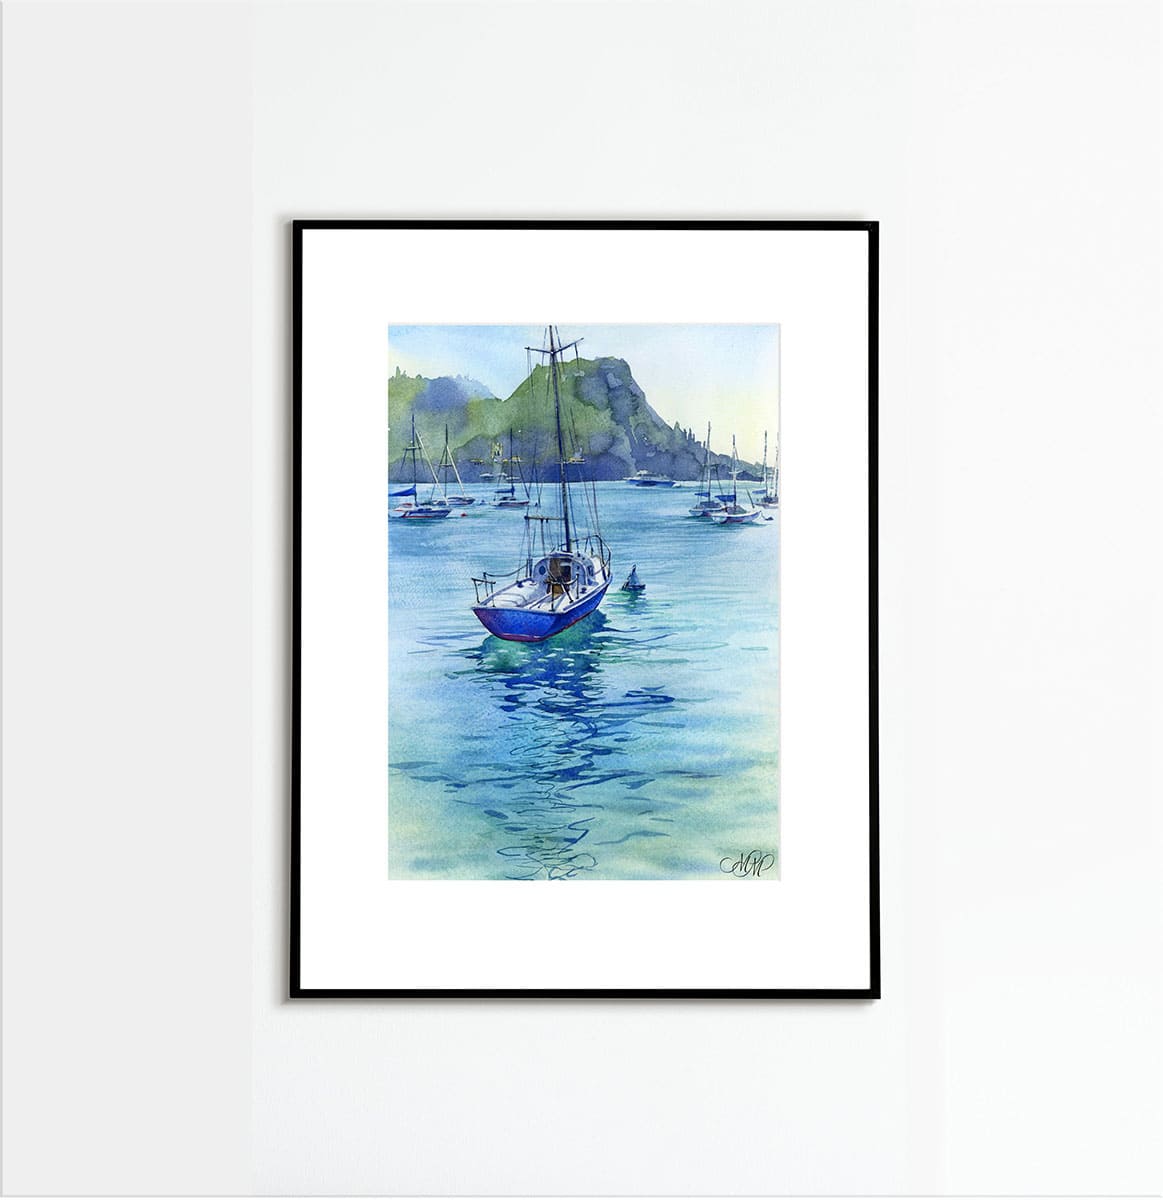 Boats on Lake Garda. Framed watercolor painting